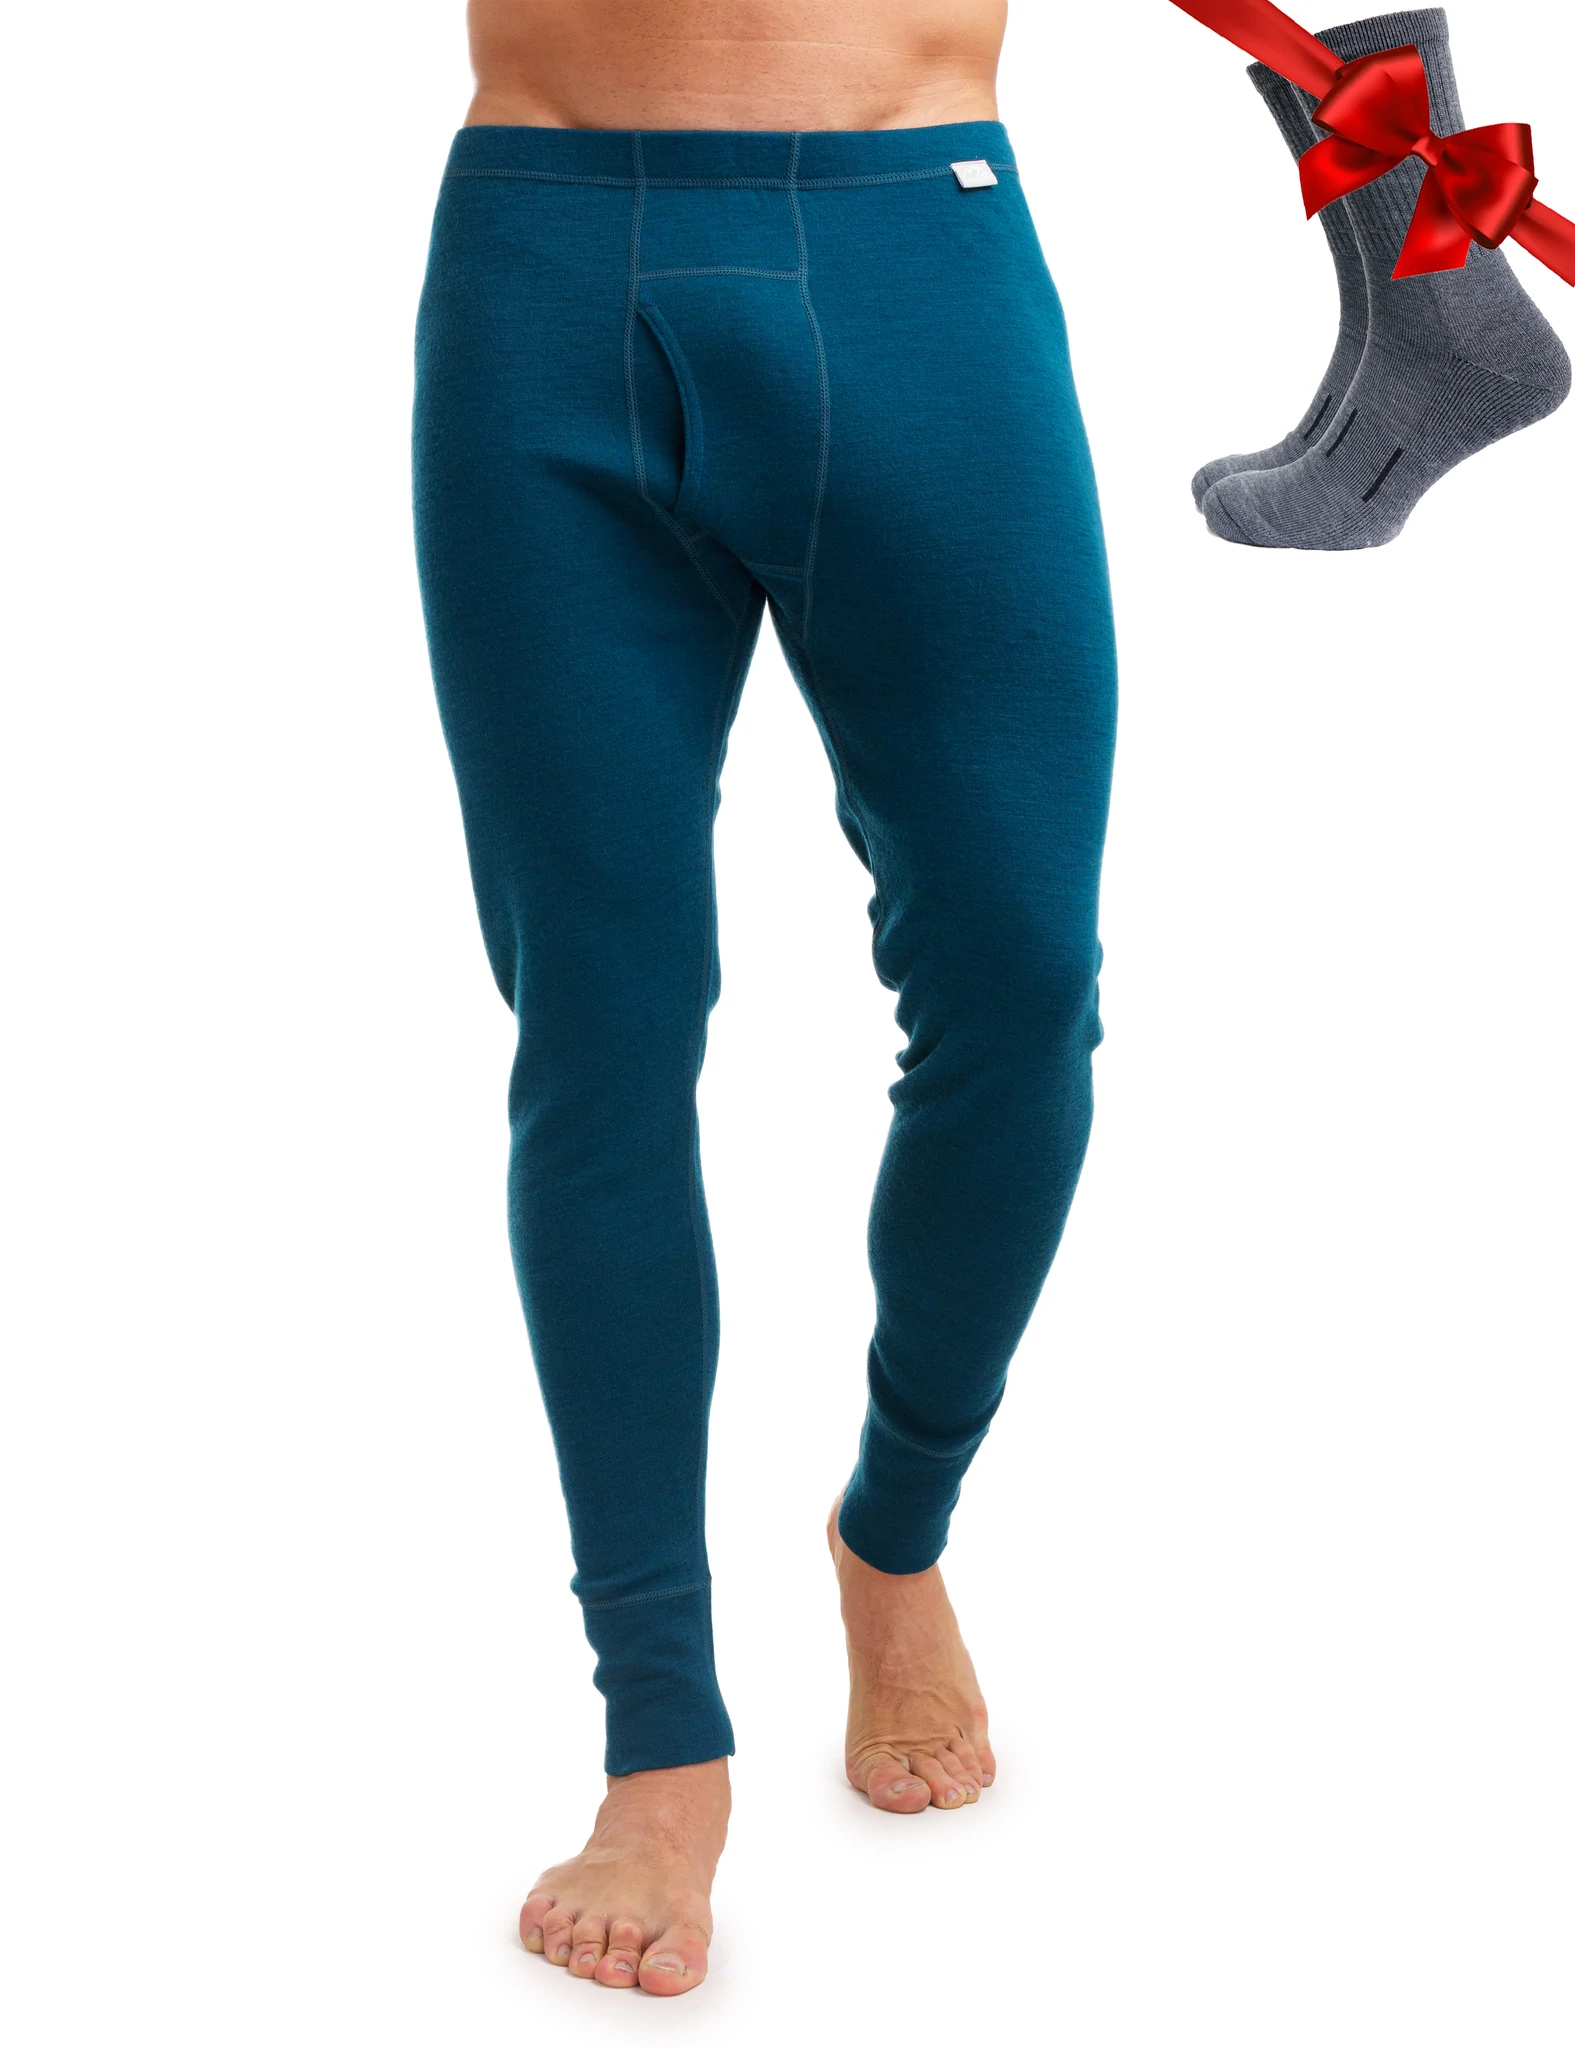 250 Deep Teal Merino Wool Base Layer Mens Bottom Pants 100% Merino Wool Midweight Thermal Underwear Long Johns + Wool Socks